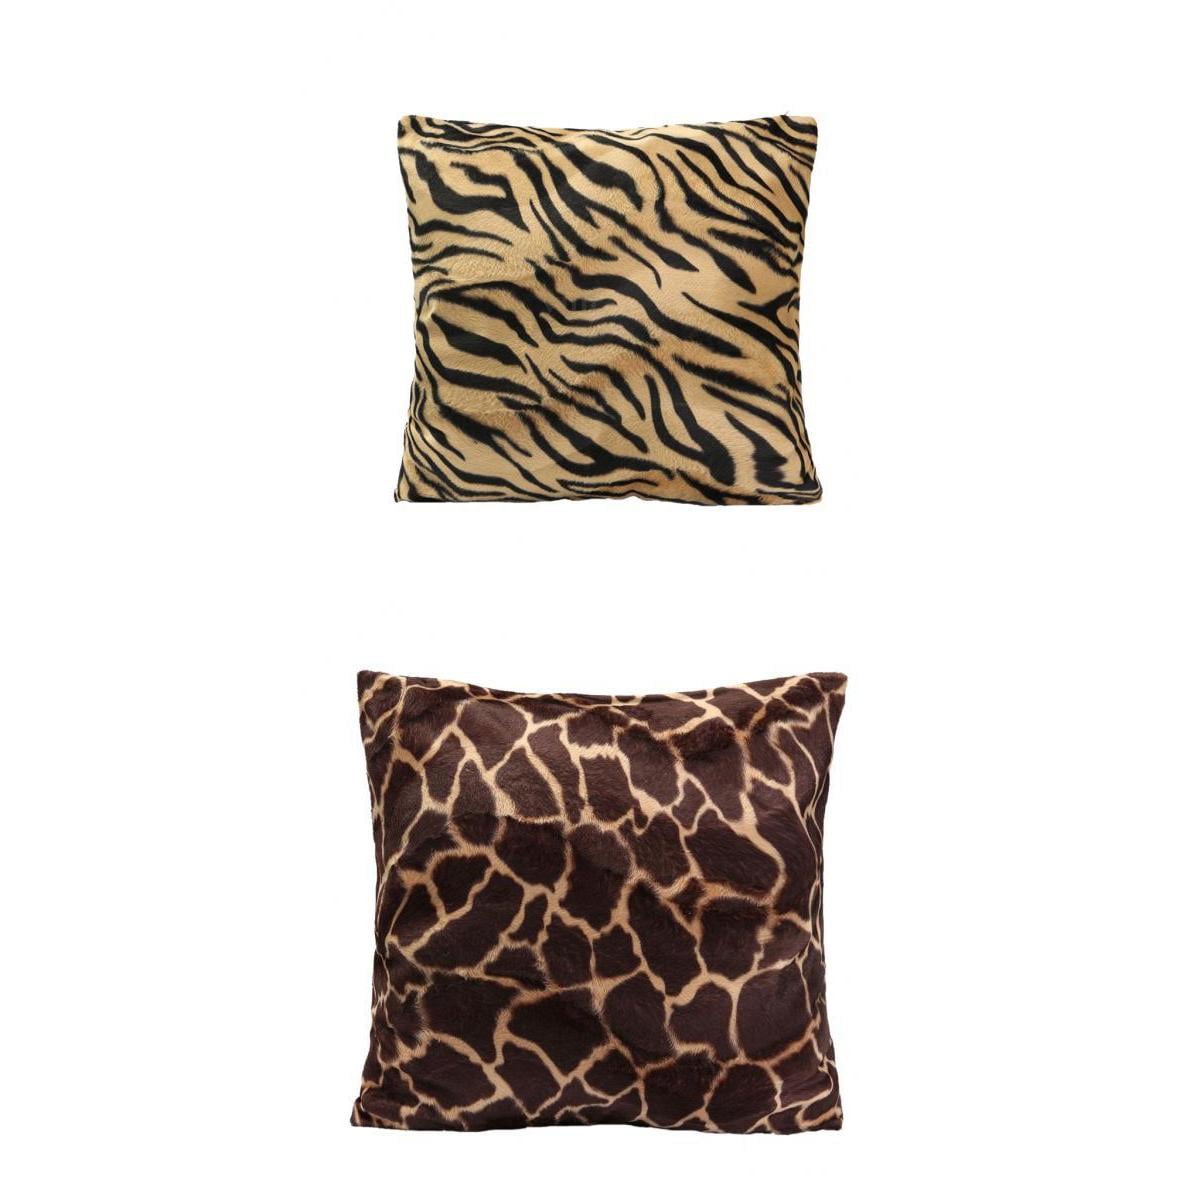 45cm Animal Print Leopard Zebra Pillow Case Cushion Cover Sofa Decor #01 